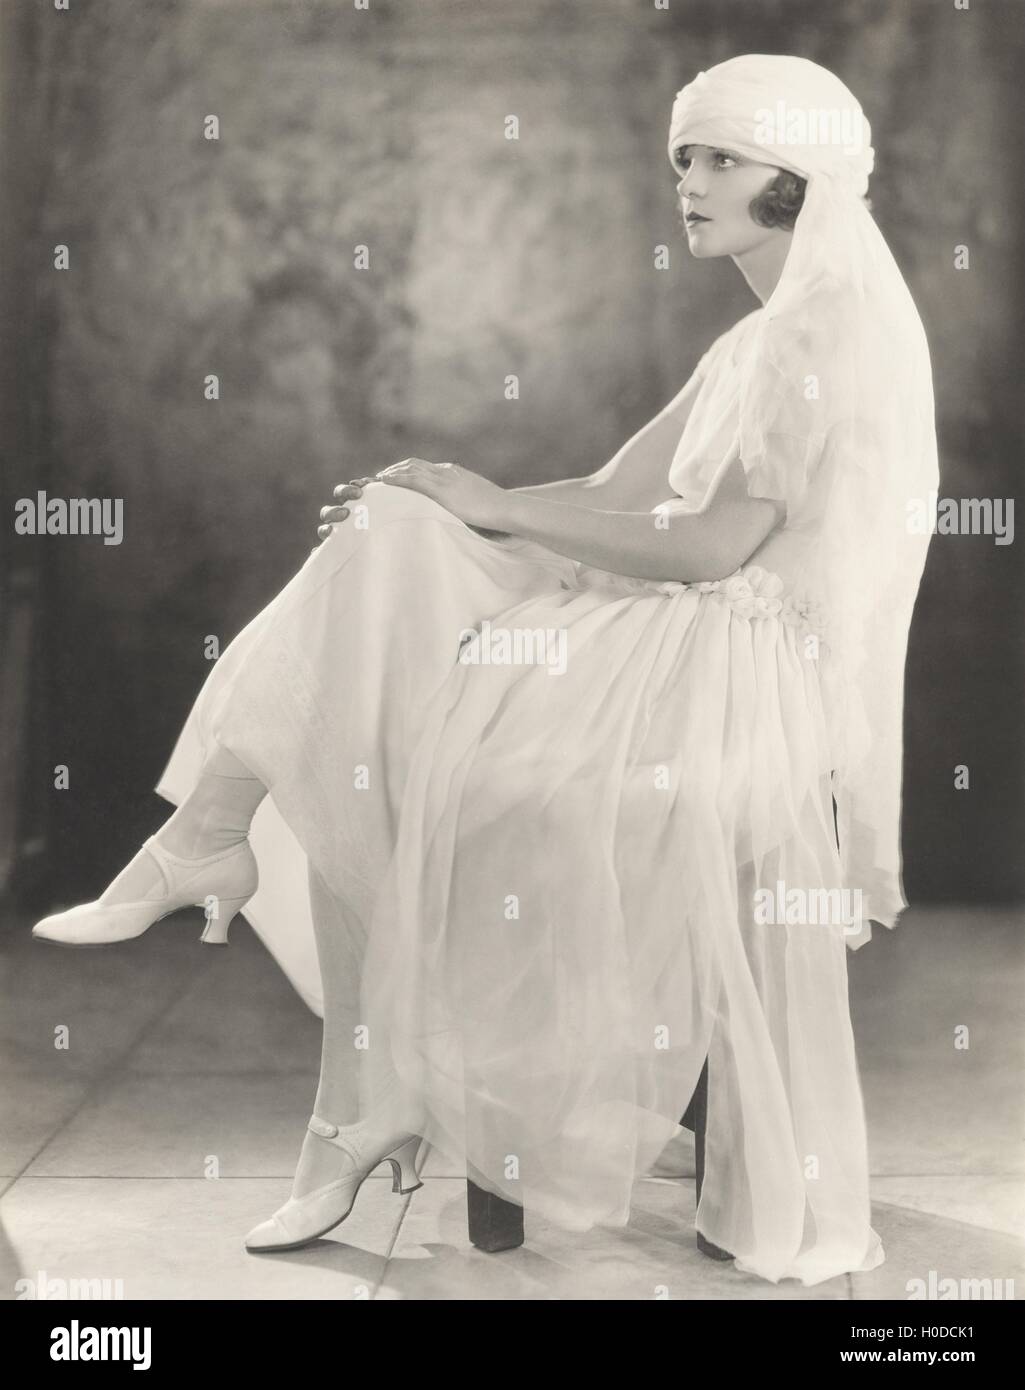 Mujer de Blanco chiffon vestido y velo turbante Foto de stock